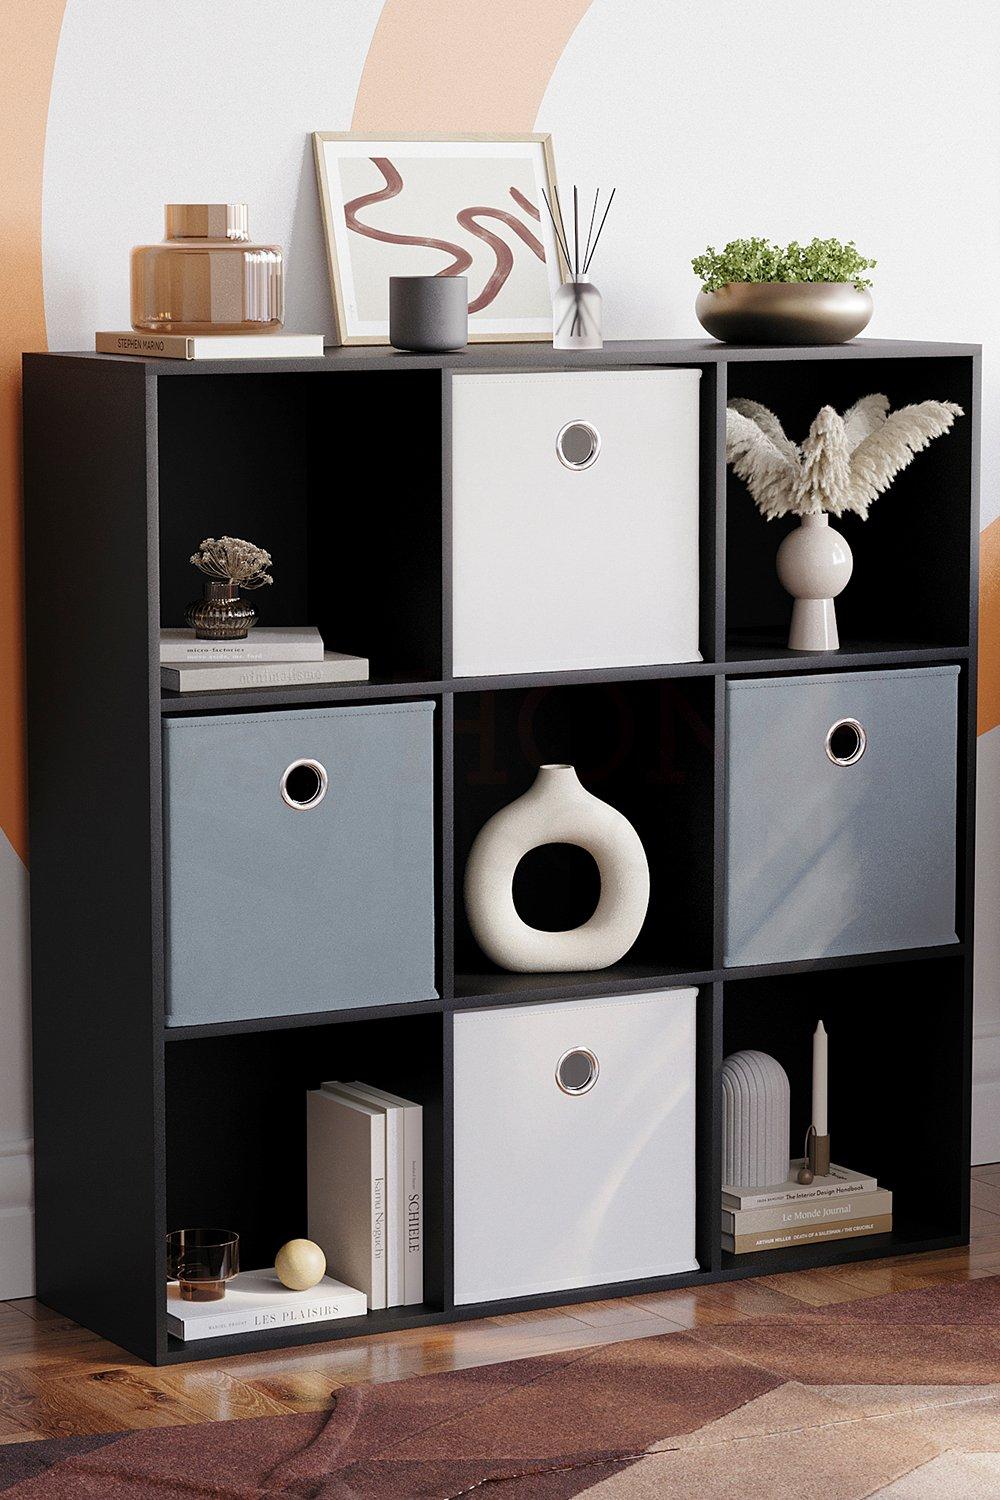 Vida Designs Durham 3x3 Cube Bookcase Storage Unit 965 x 965 x 290 mm